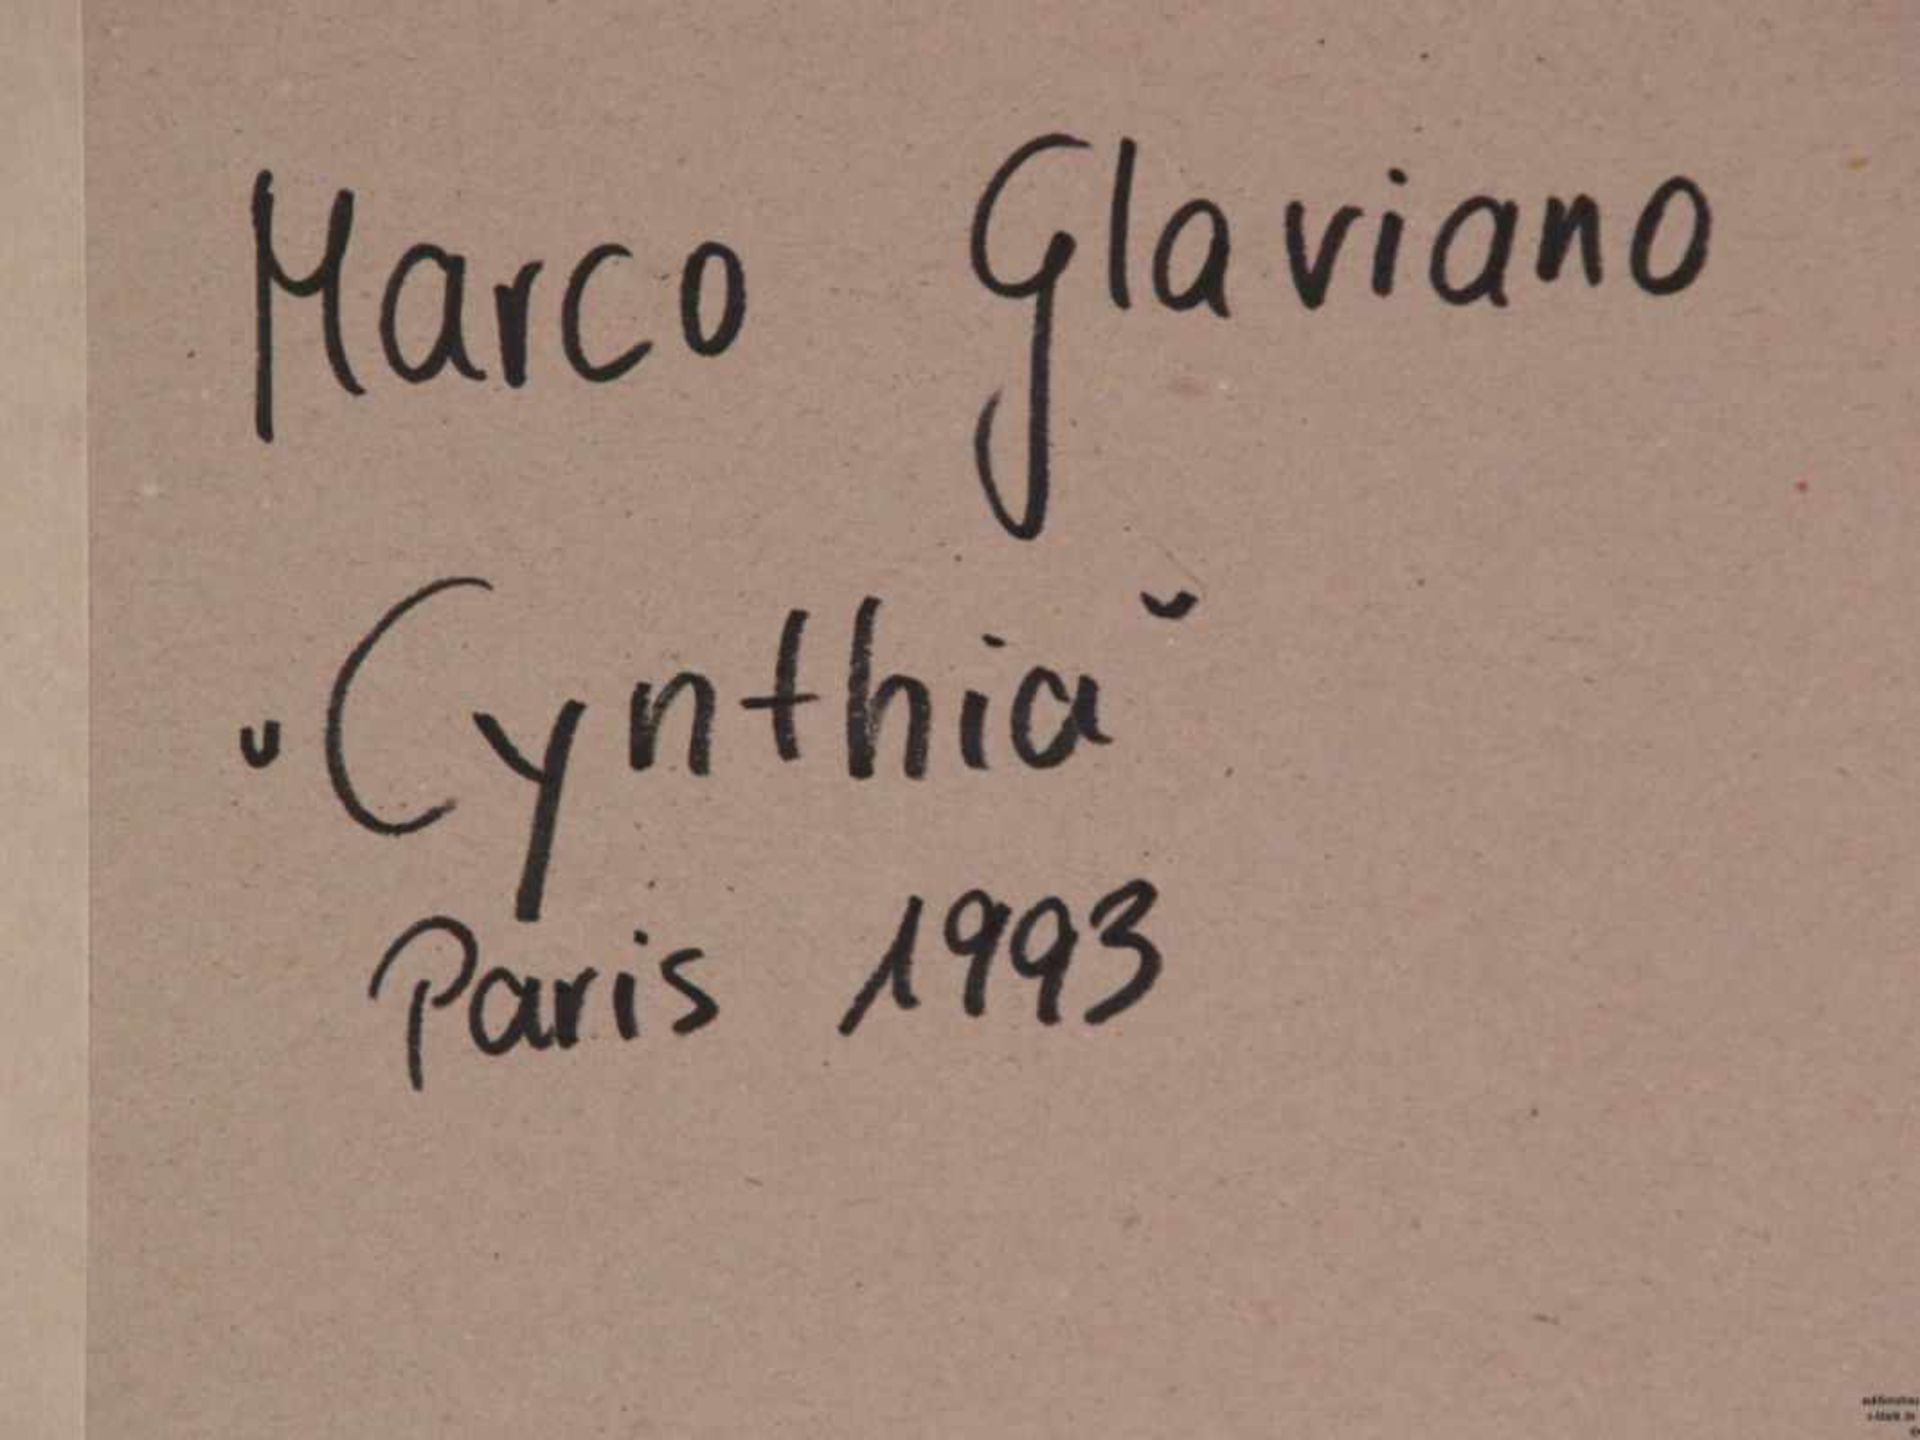 Glaviano, Marco (geb. 1942) - "Cynthia", Paris 1981, Offsetdruck, hinter Glas gerahmt, Rahmenmaß: - Bild 3 aus 3